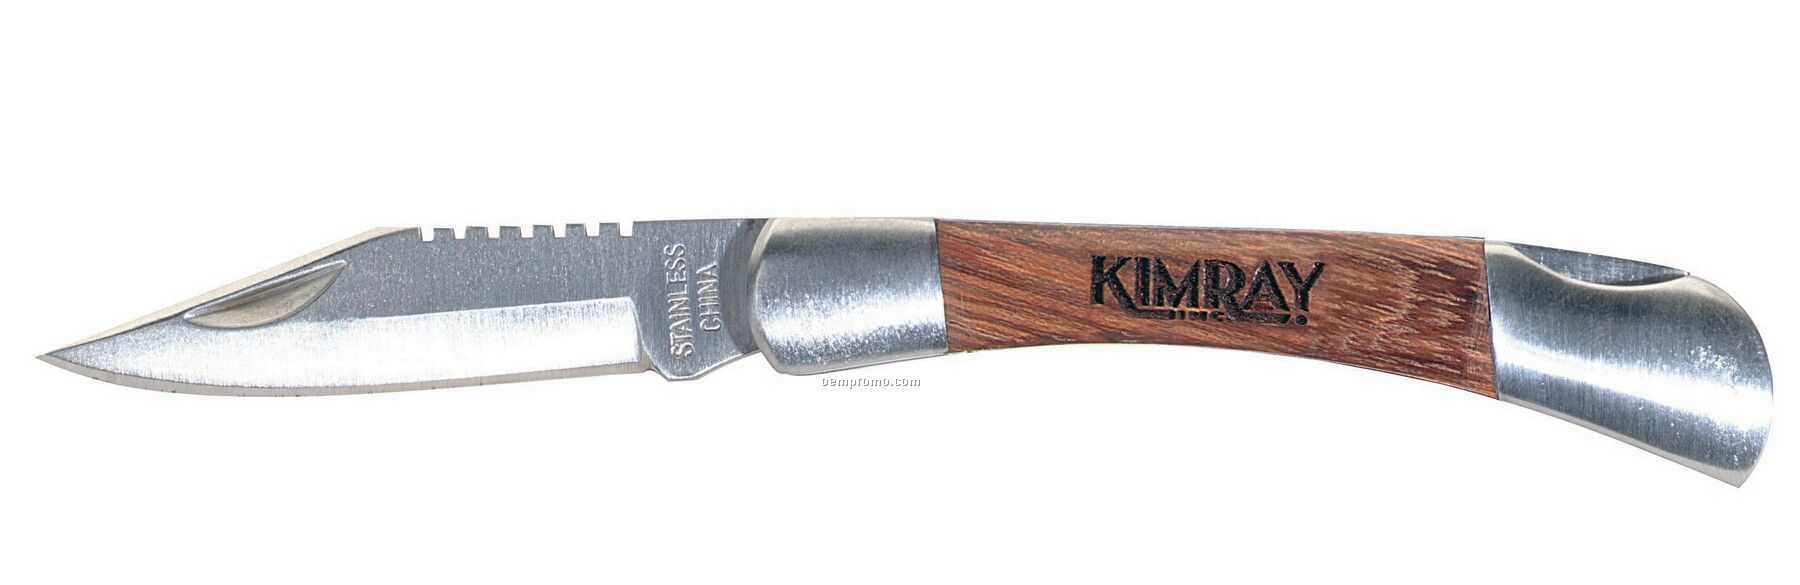 V-line Small Rosewood Pocket Knife (Silver)